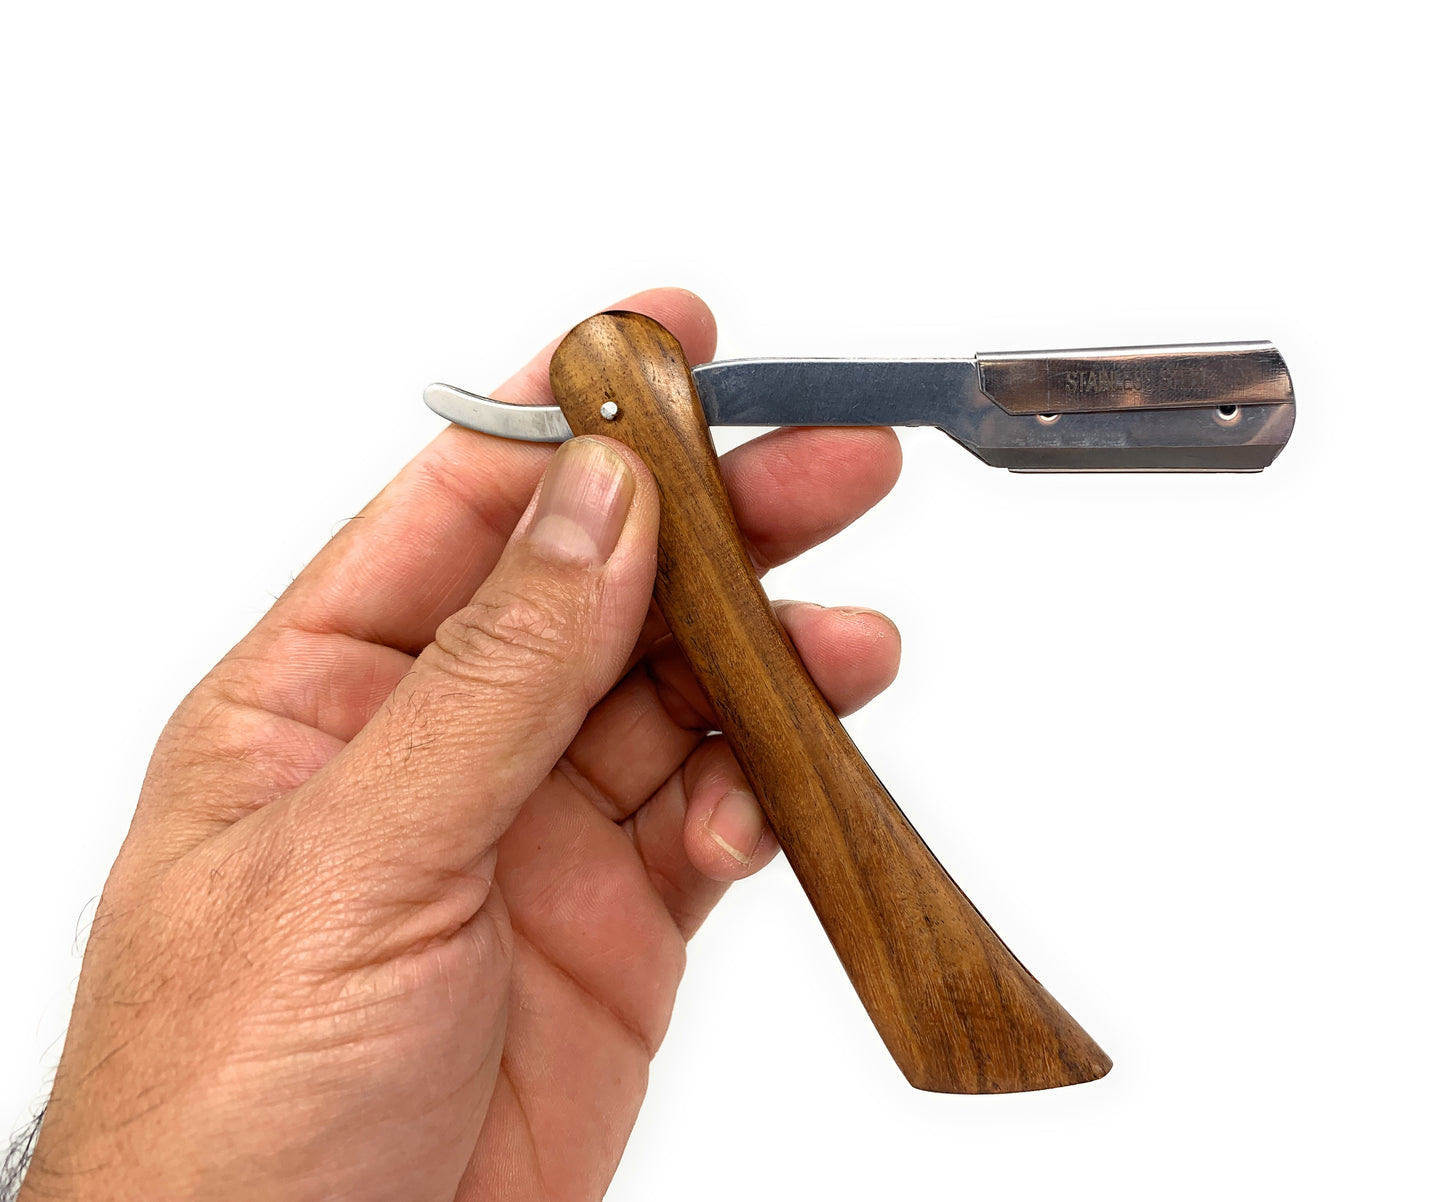 Scalpmaster Wooden Handle Straight Edge Razor Barber Razor Blade Razor Razor Barber 1 Pc.